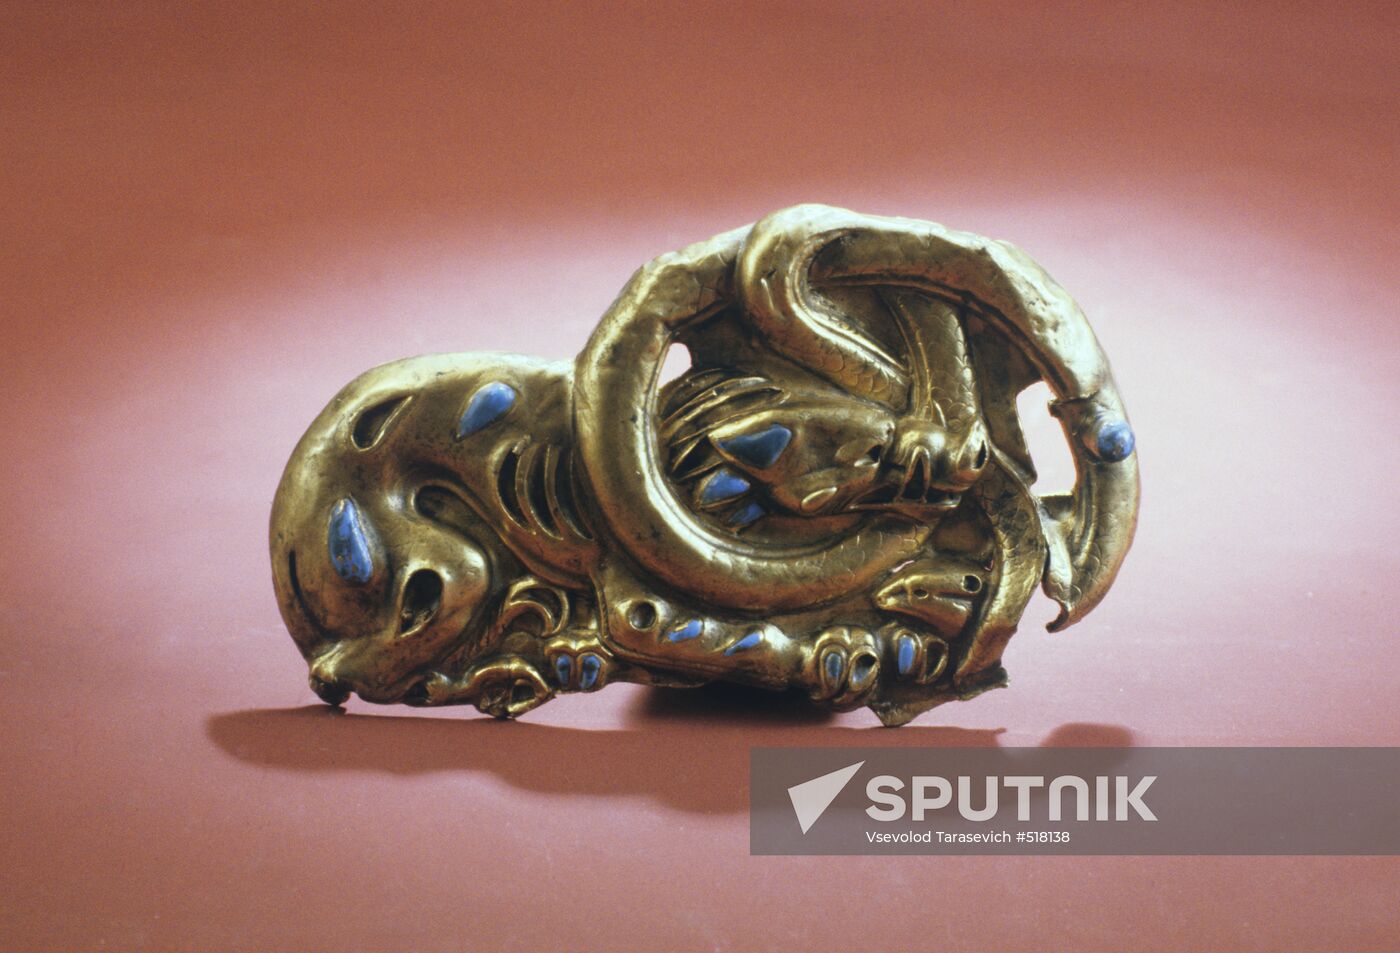 Scythian gold objects